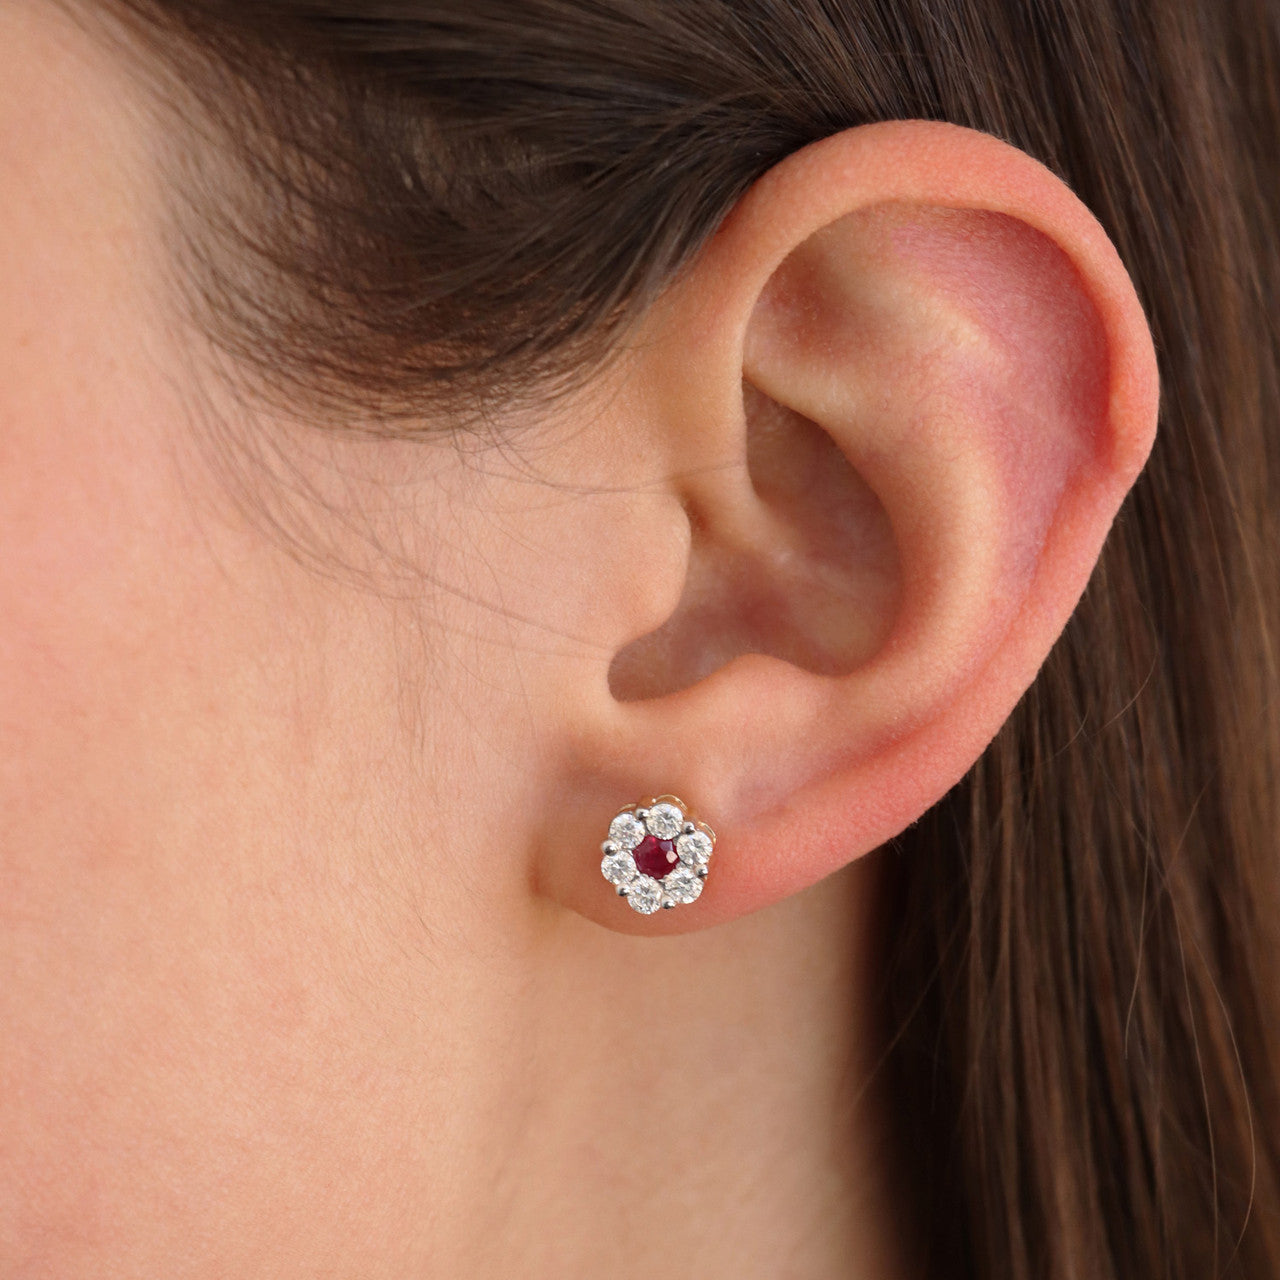 Ice Jewellery Ruby Diamond Earrings with 0.80ct Diamonds in 9K Yellow Gold - 9YRE100GHR | Ice Jewellery Australia